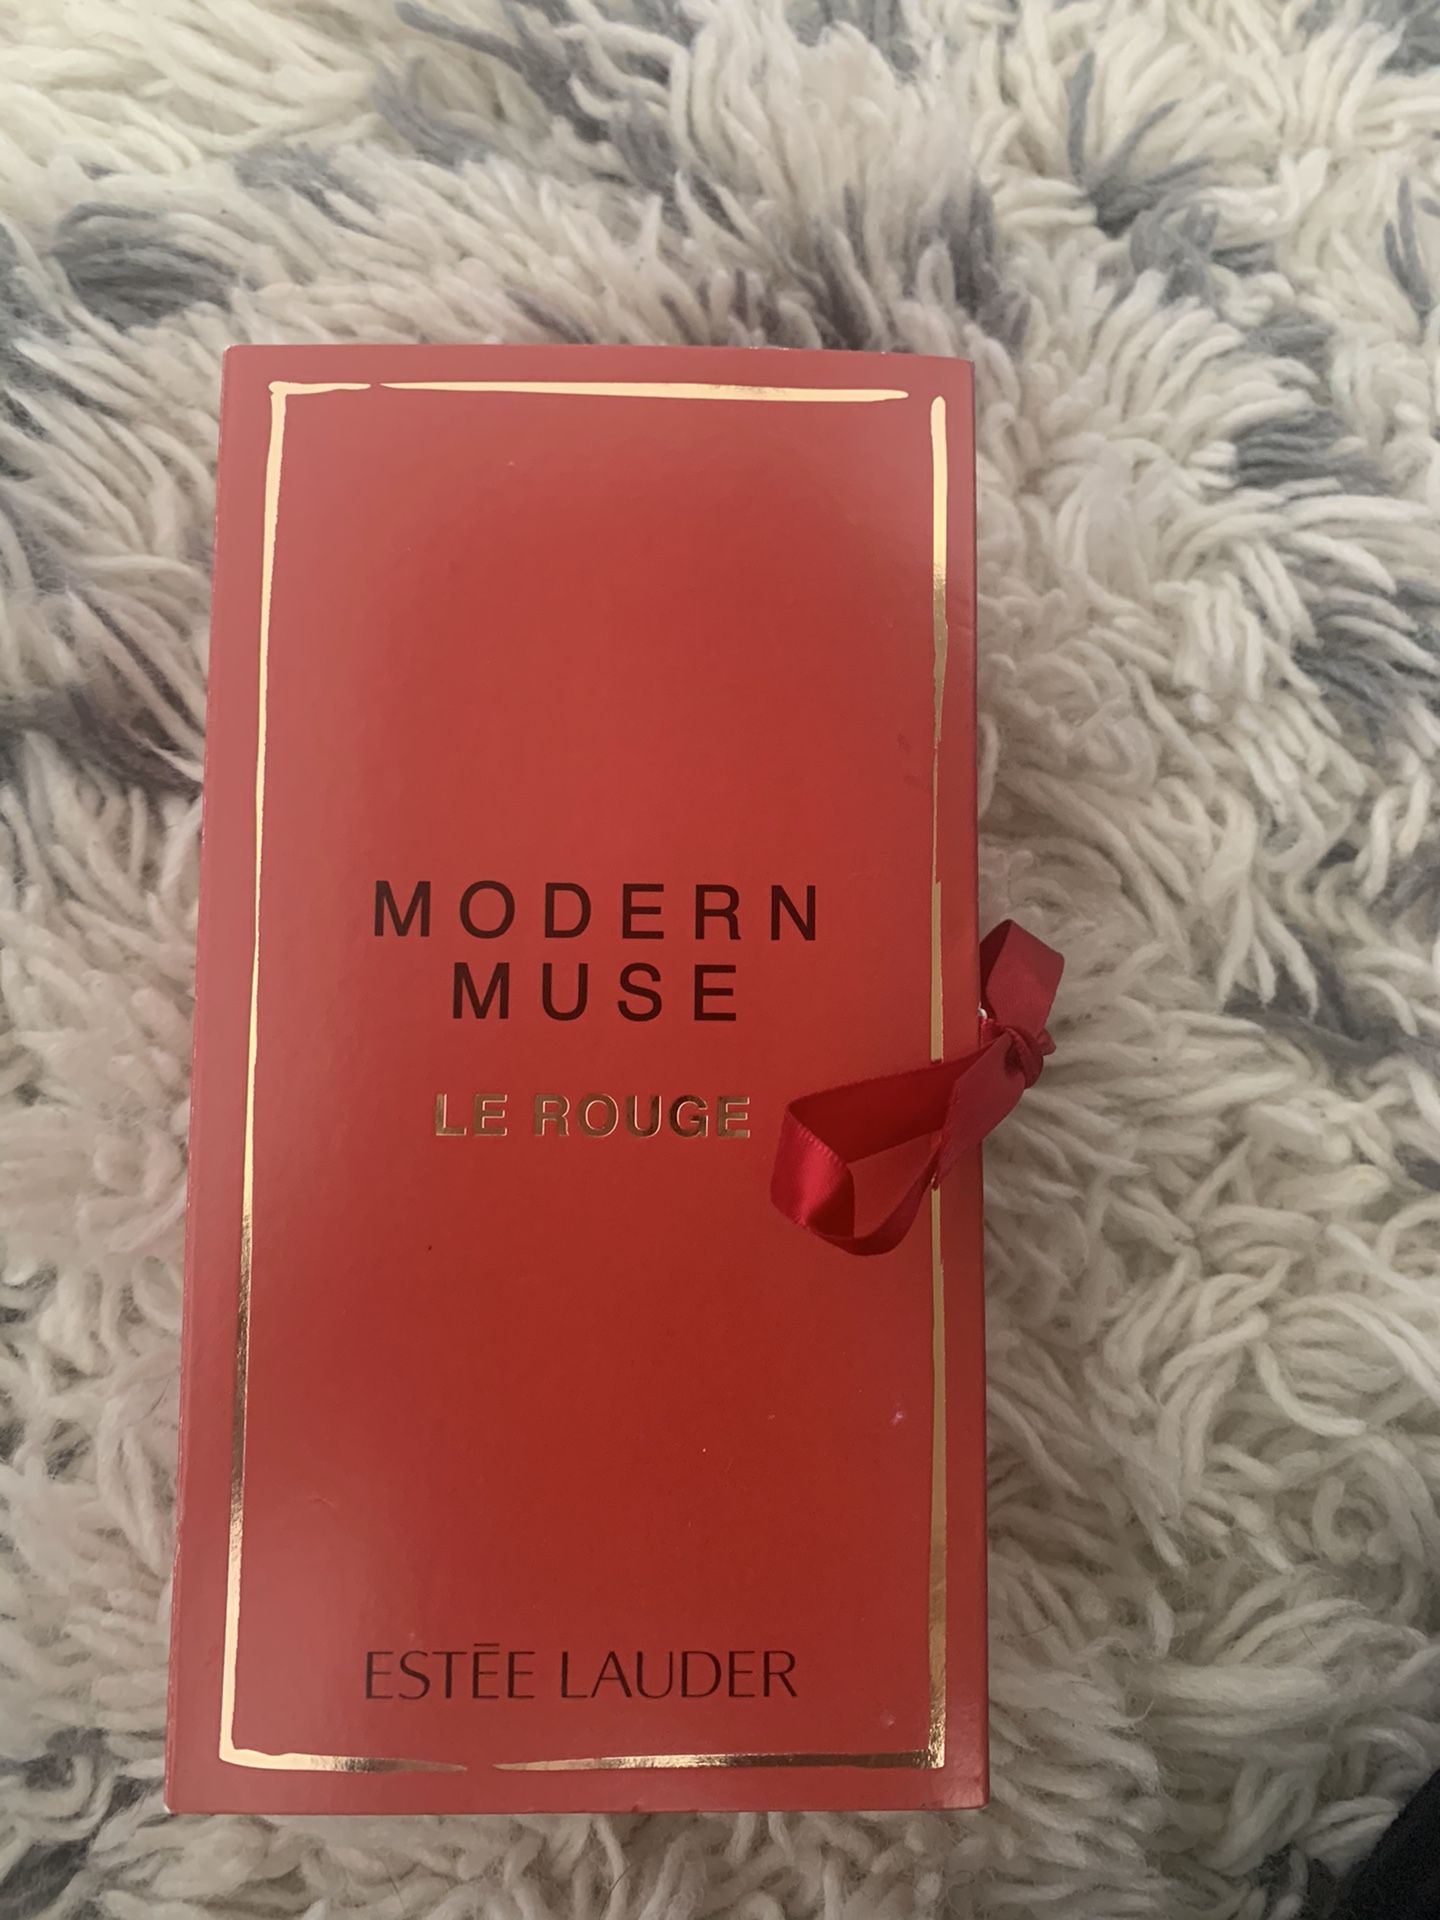 Modern Muse fragrance